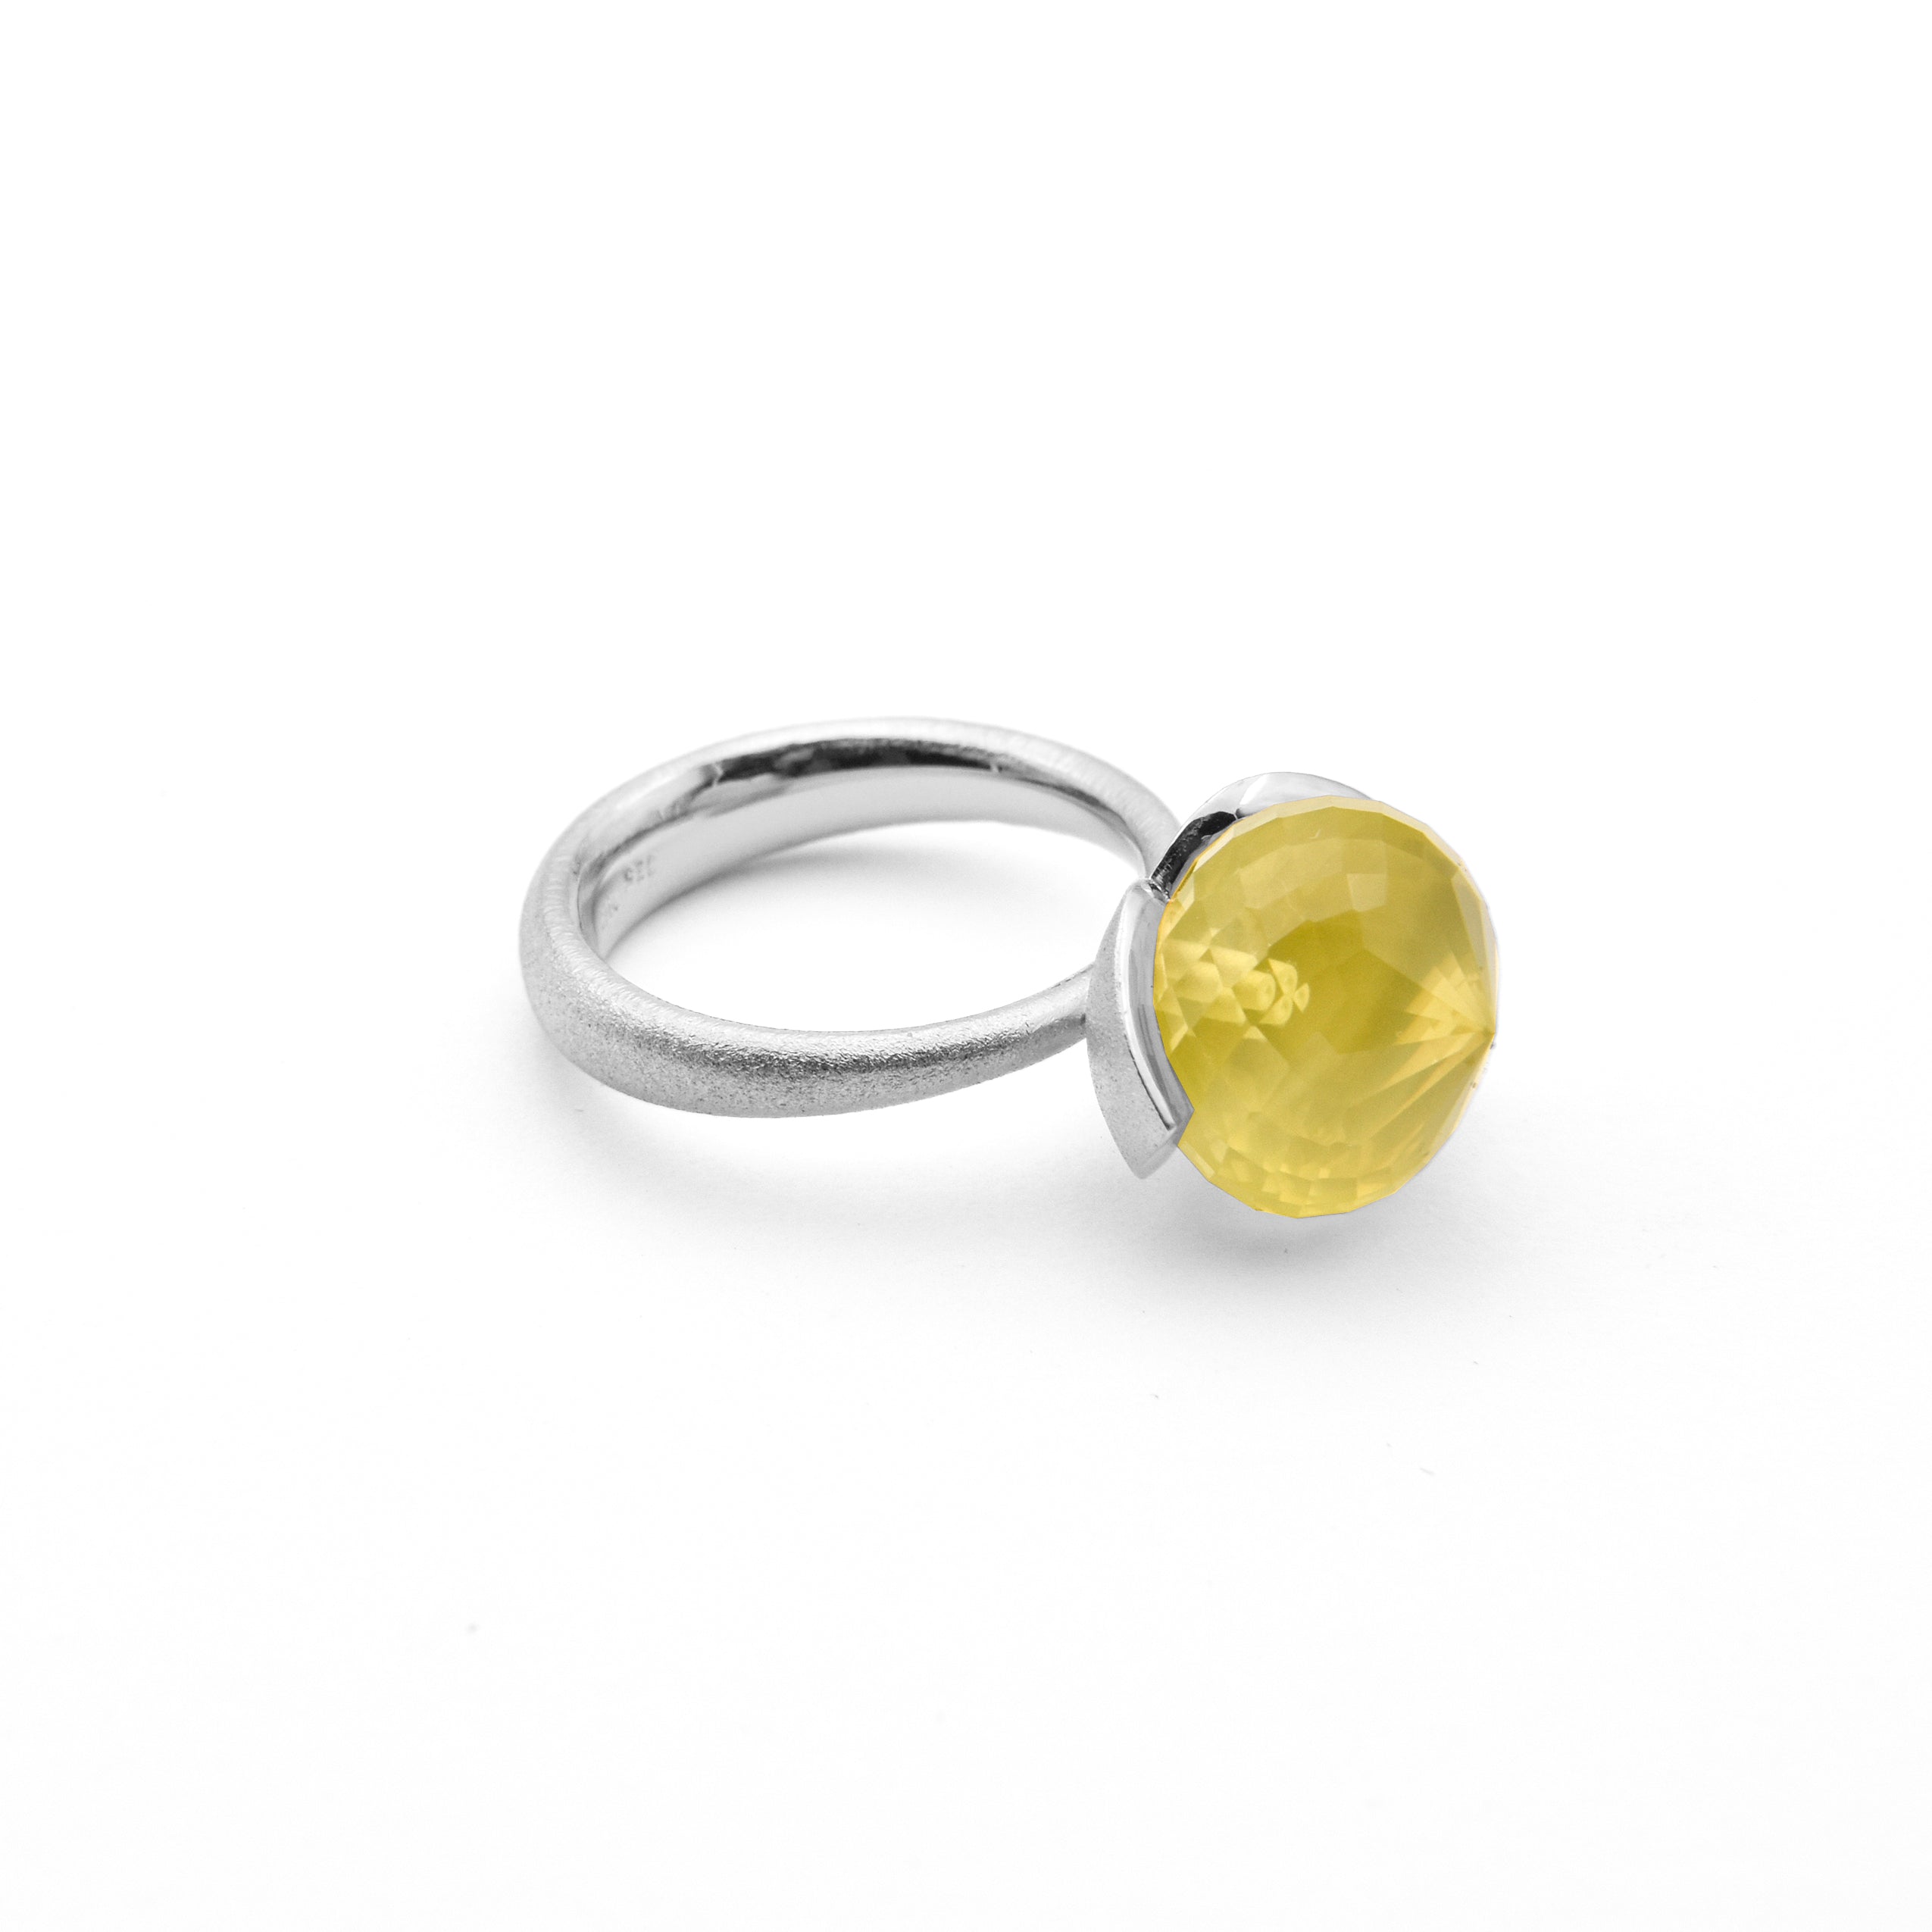 Dolce ring "big" with lemon quartz 925/-